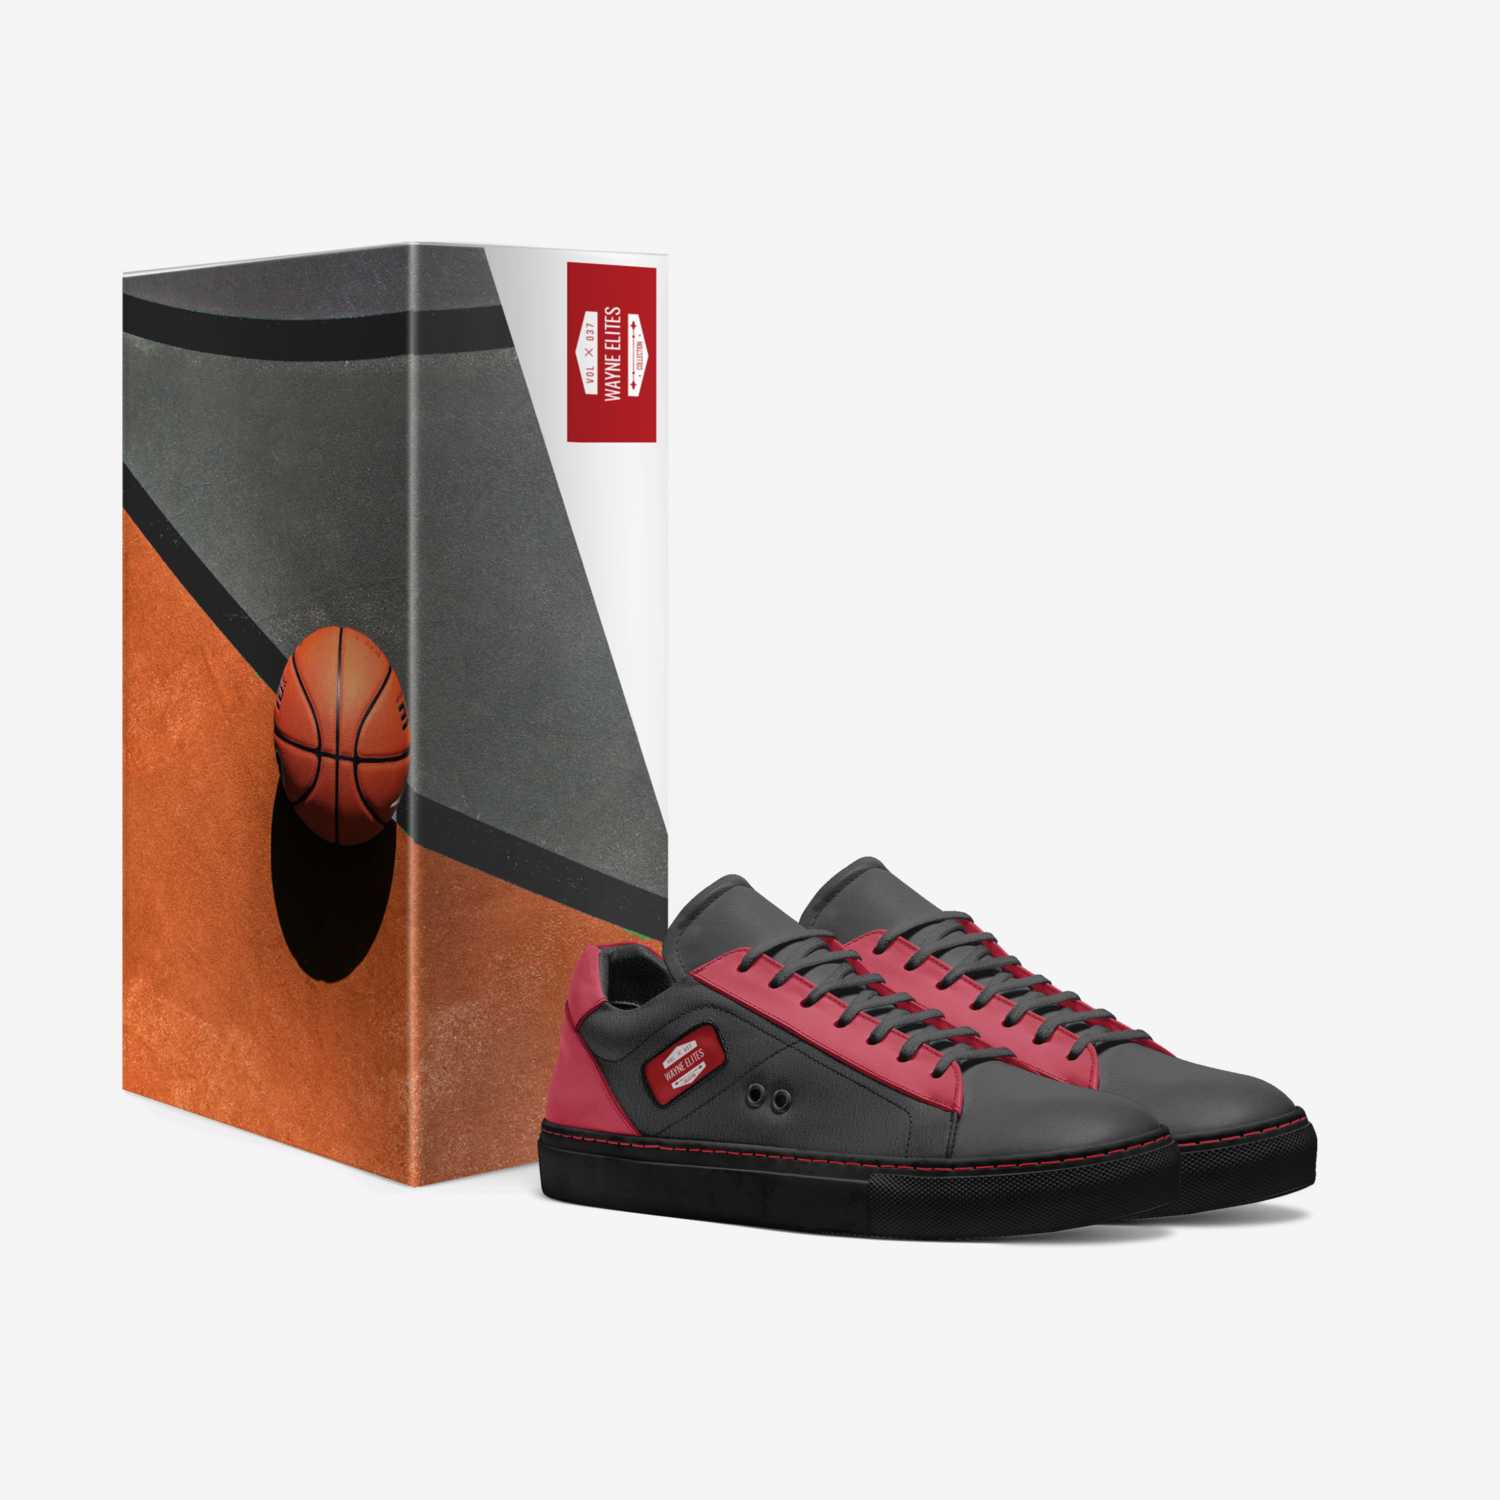 Wayne elites custom made in Italy shoes by Jordan Peterson | Box view